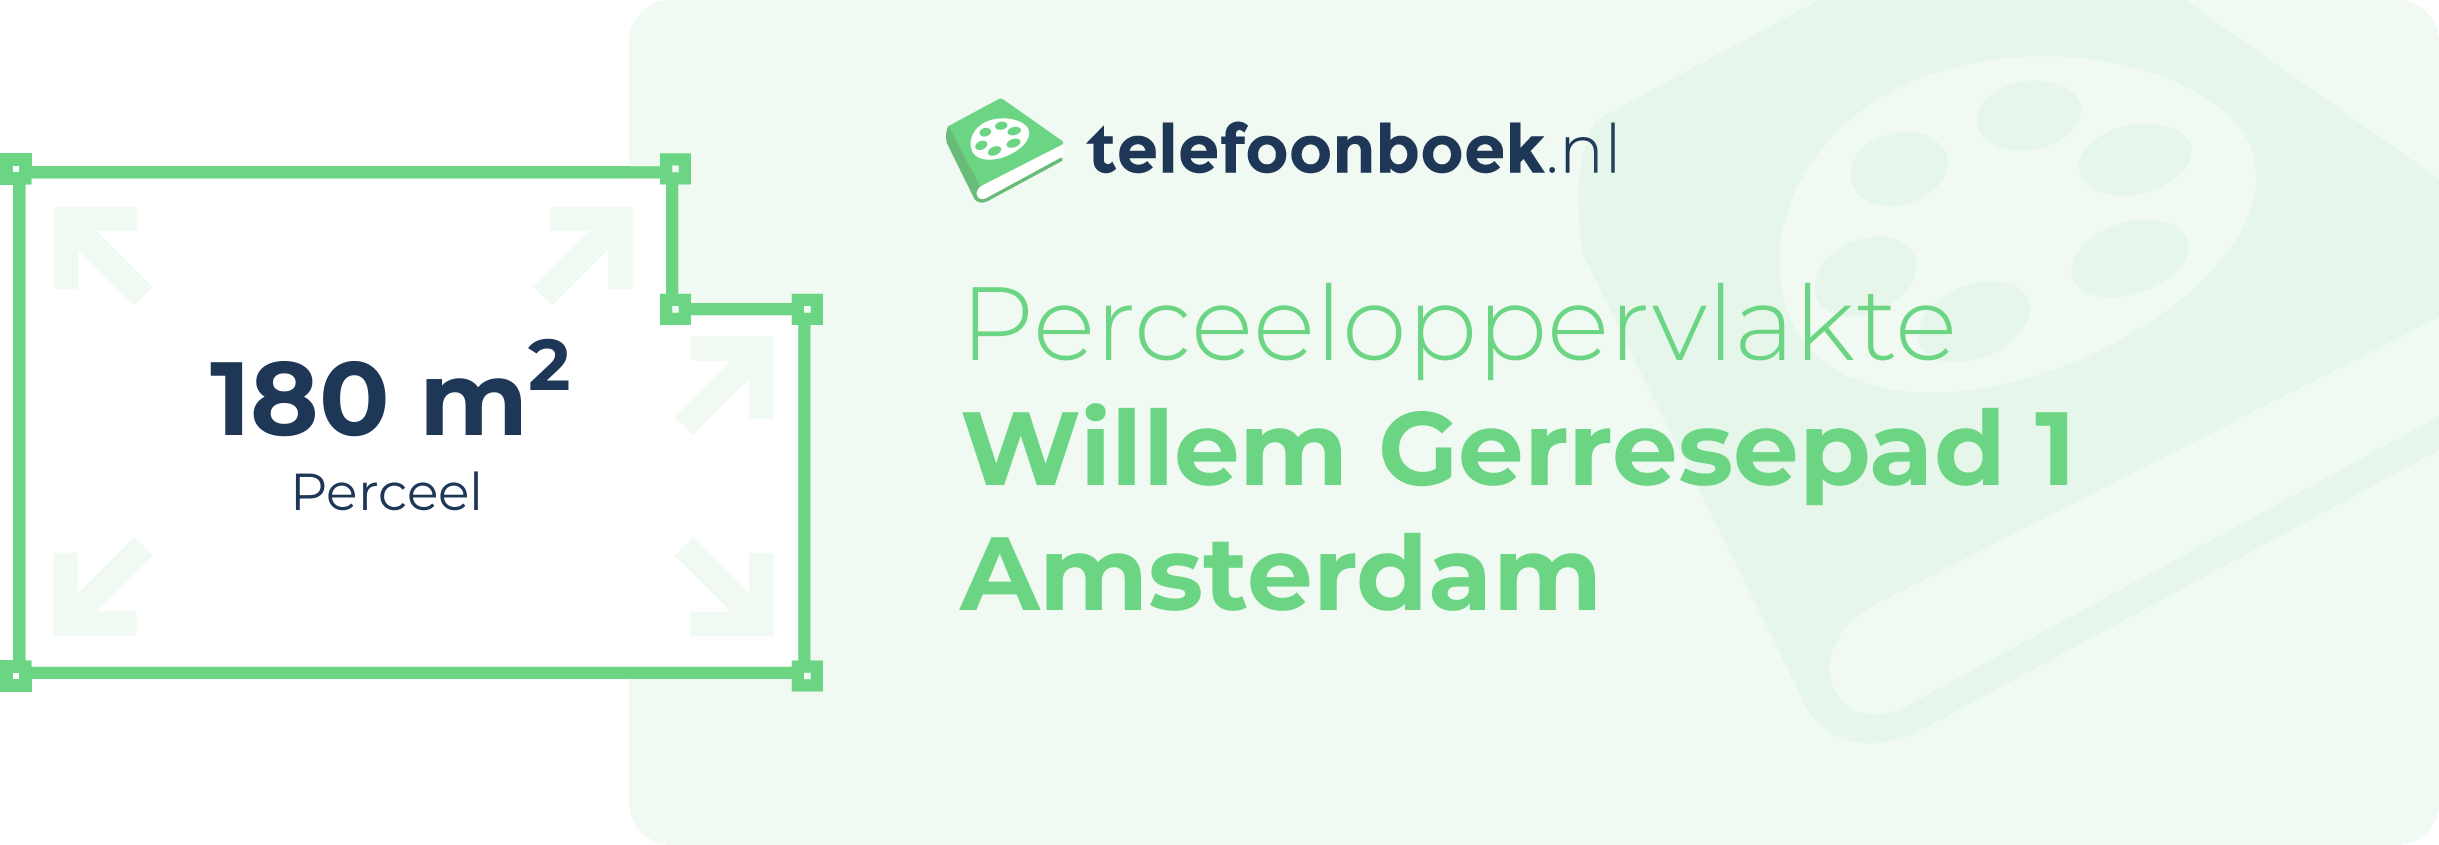 Perceeloppervlakte Willem Gerresepad 1 Amsterdam